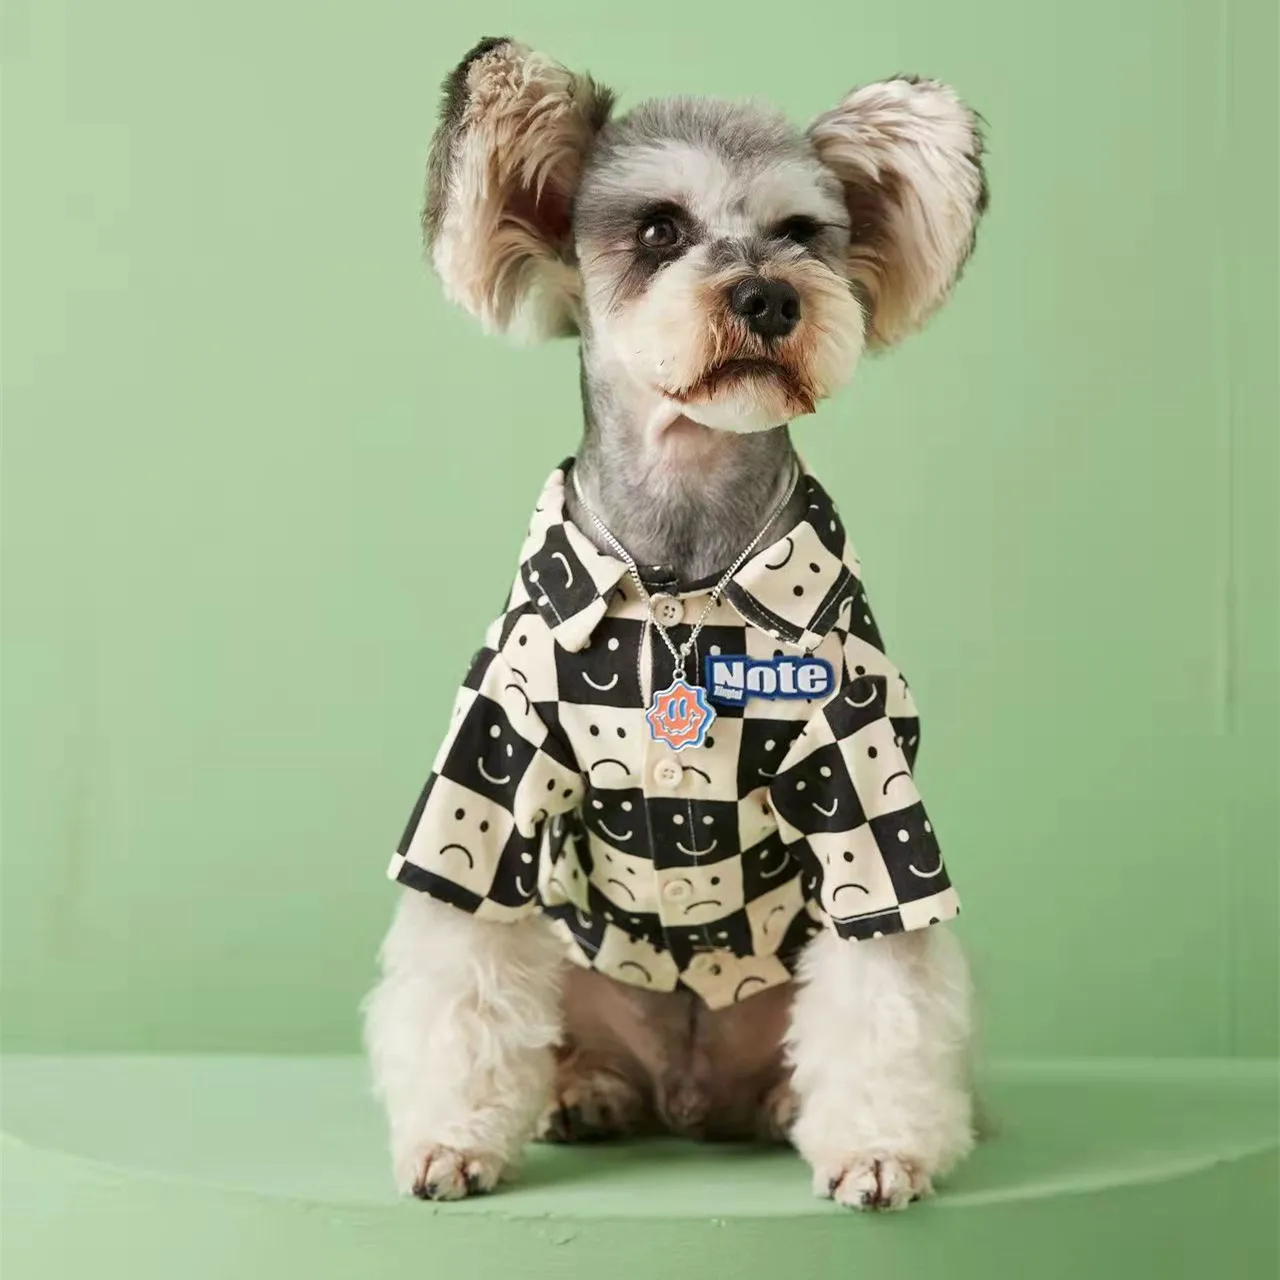 Pet Clothes Small Dog Plaid Shirt Spring Summer Puppy Cartoon Cute Coat Cat Fashion T-shirt Chihuahua Yorkshire Poodle Bulldog